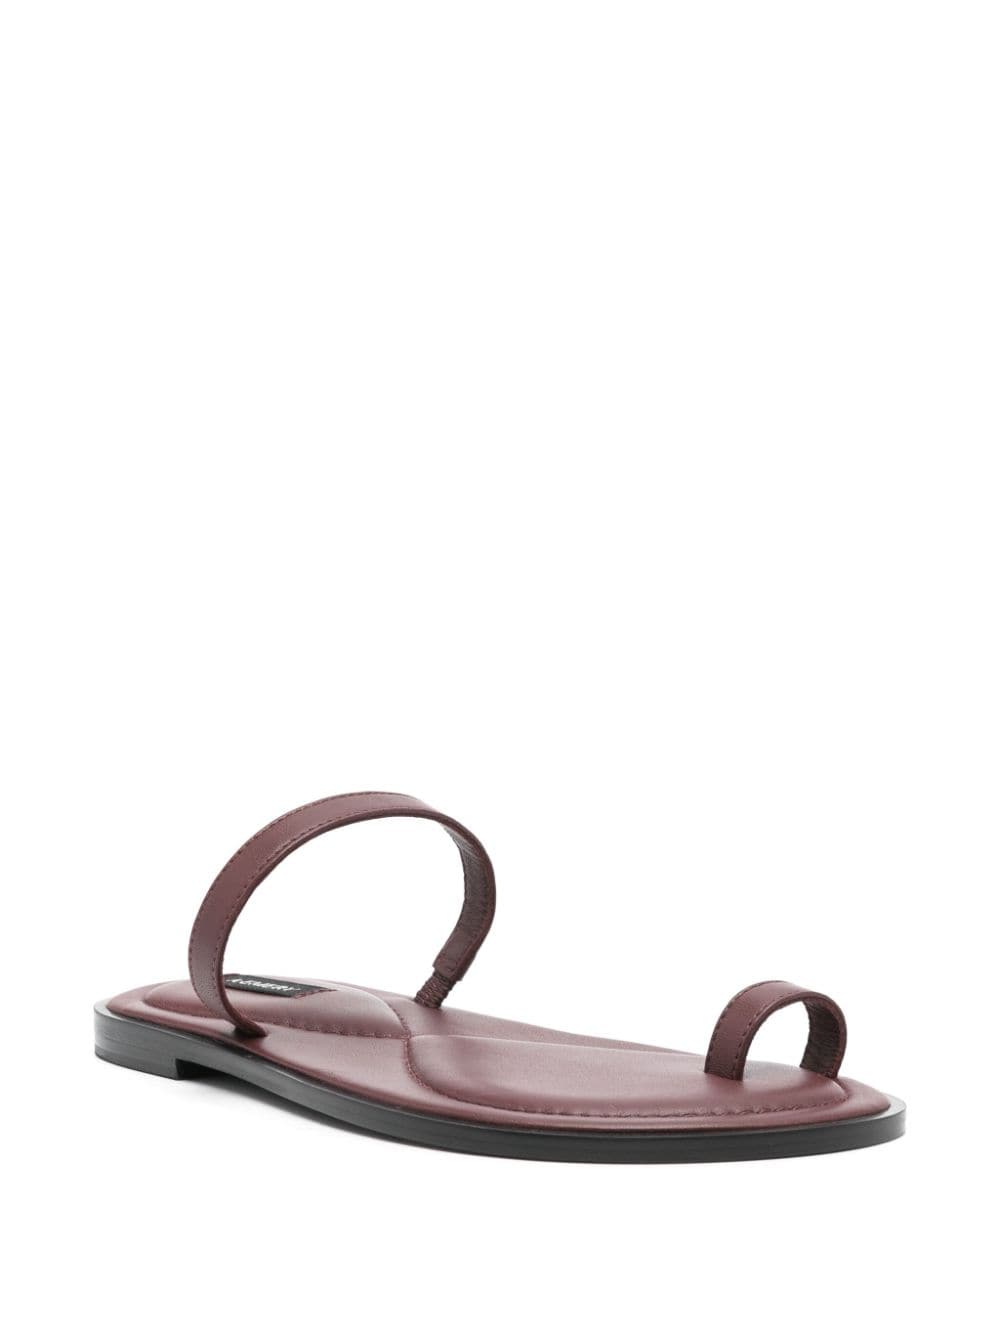 A.EMERY Turi leather sandals - Rood